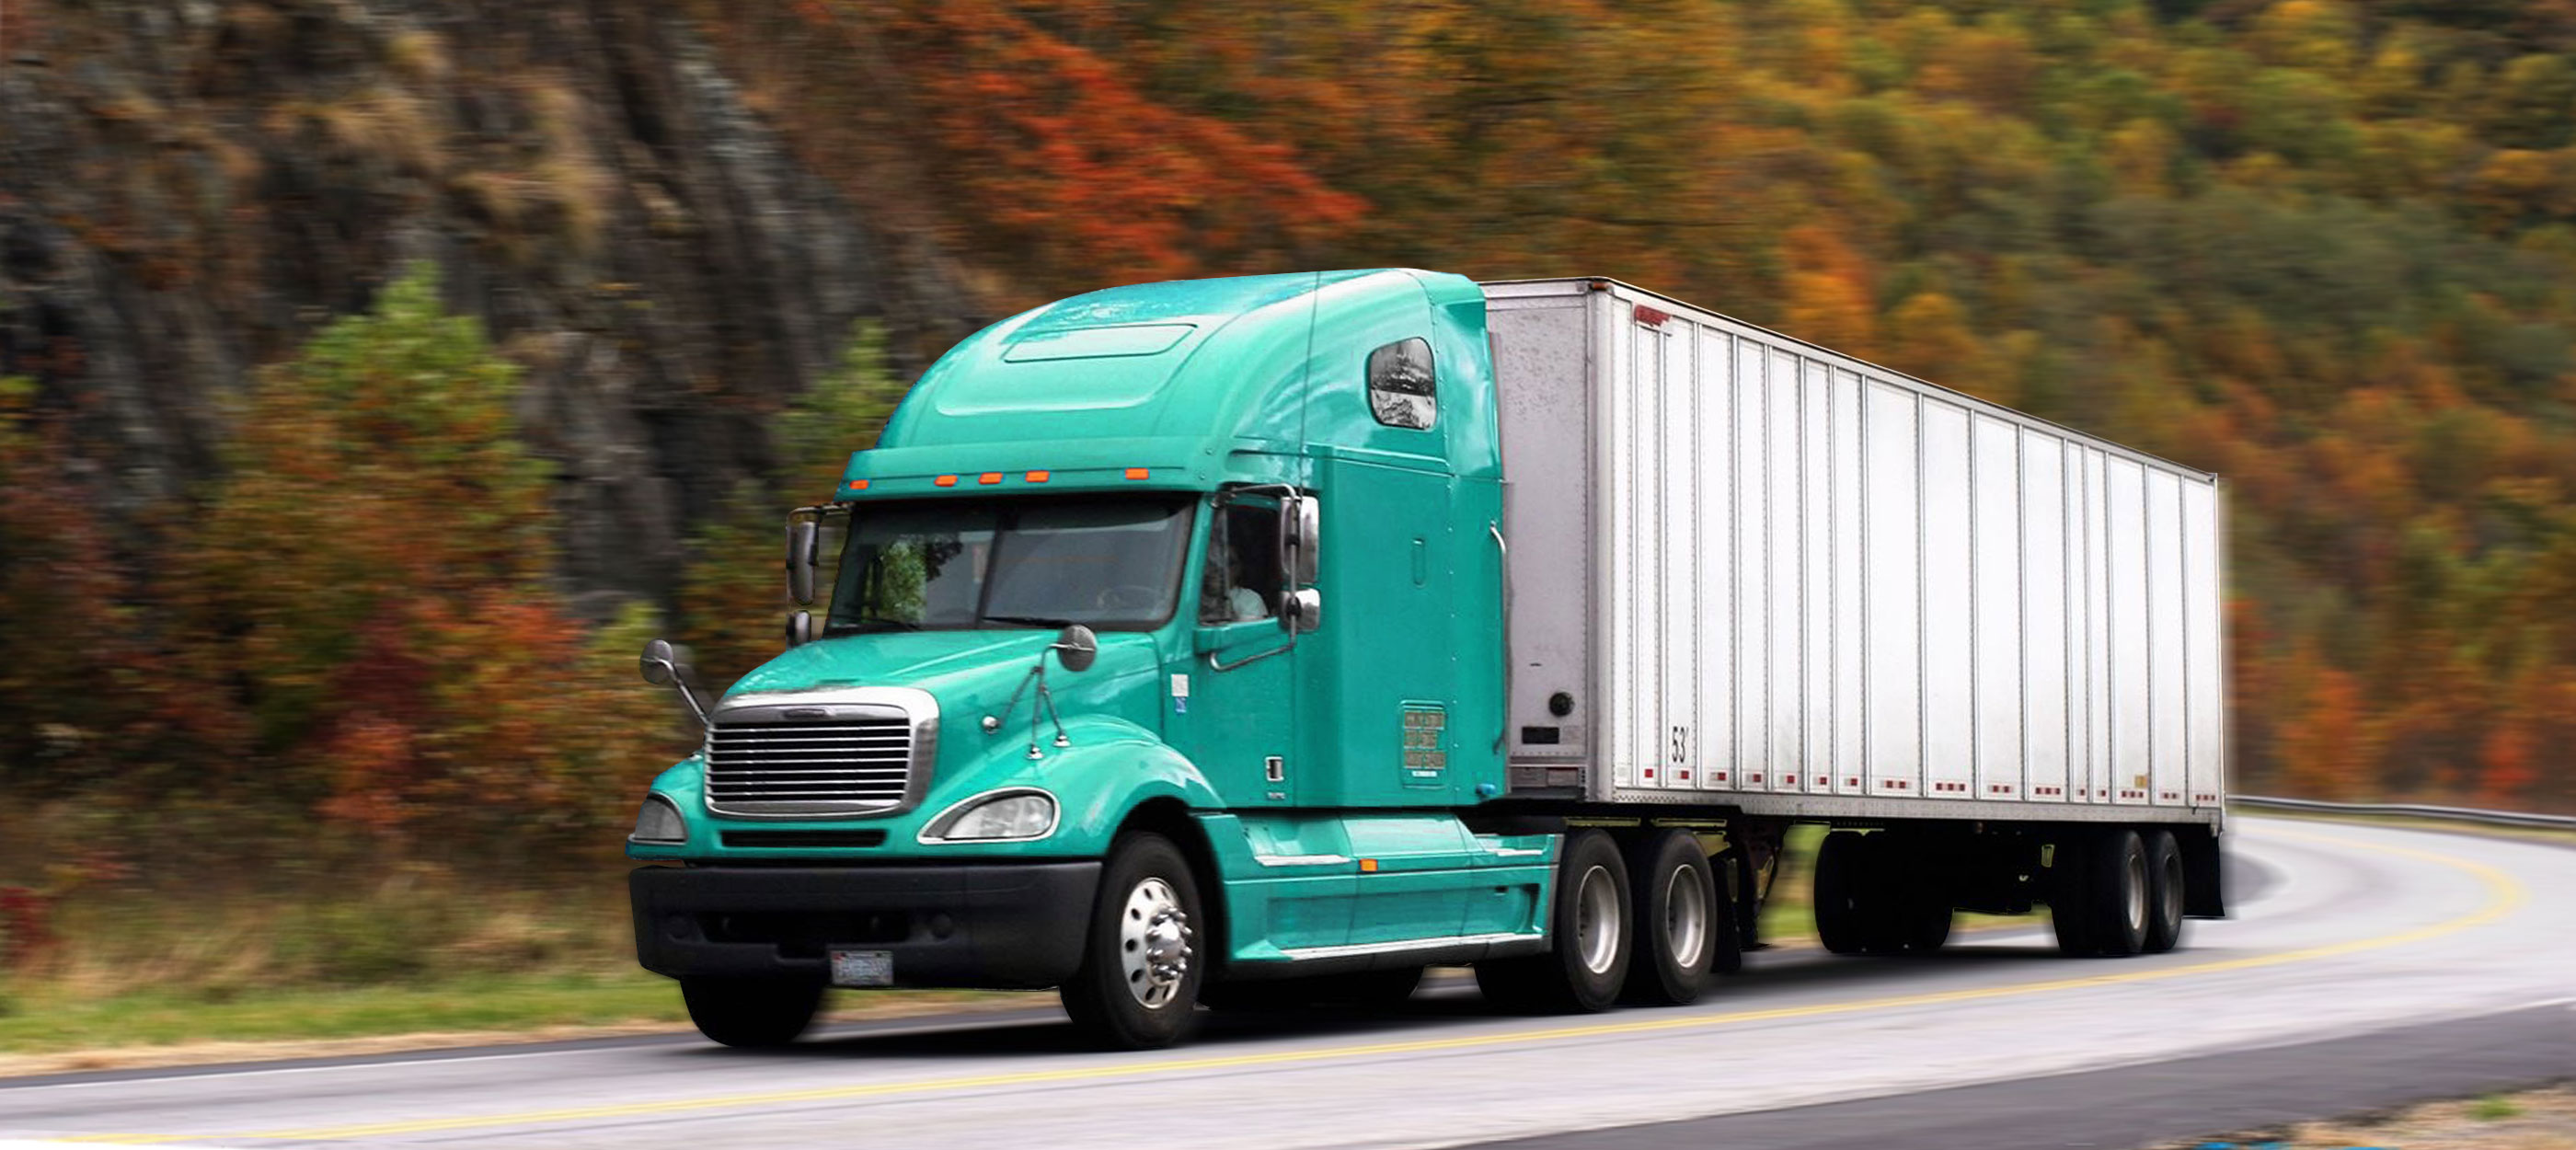 A long-haul truck financed by CWB National Leasing